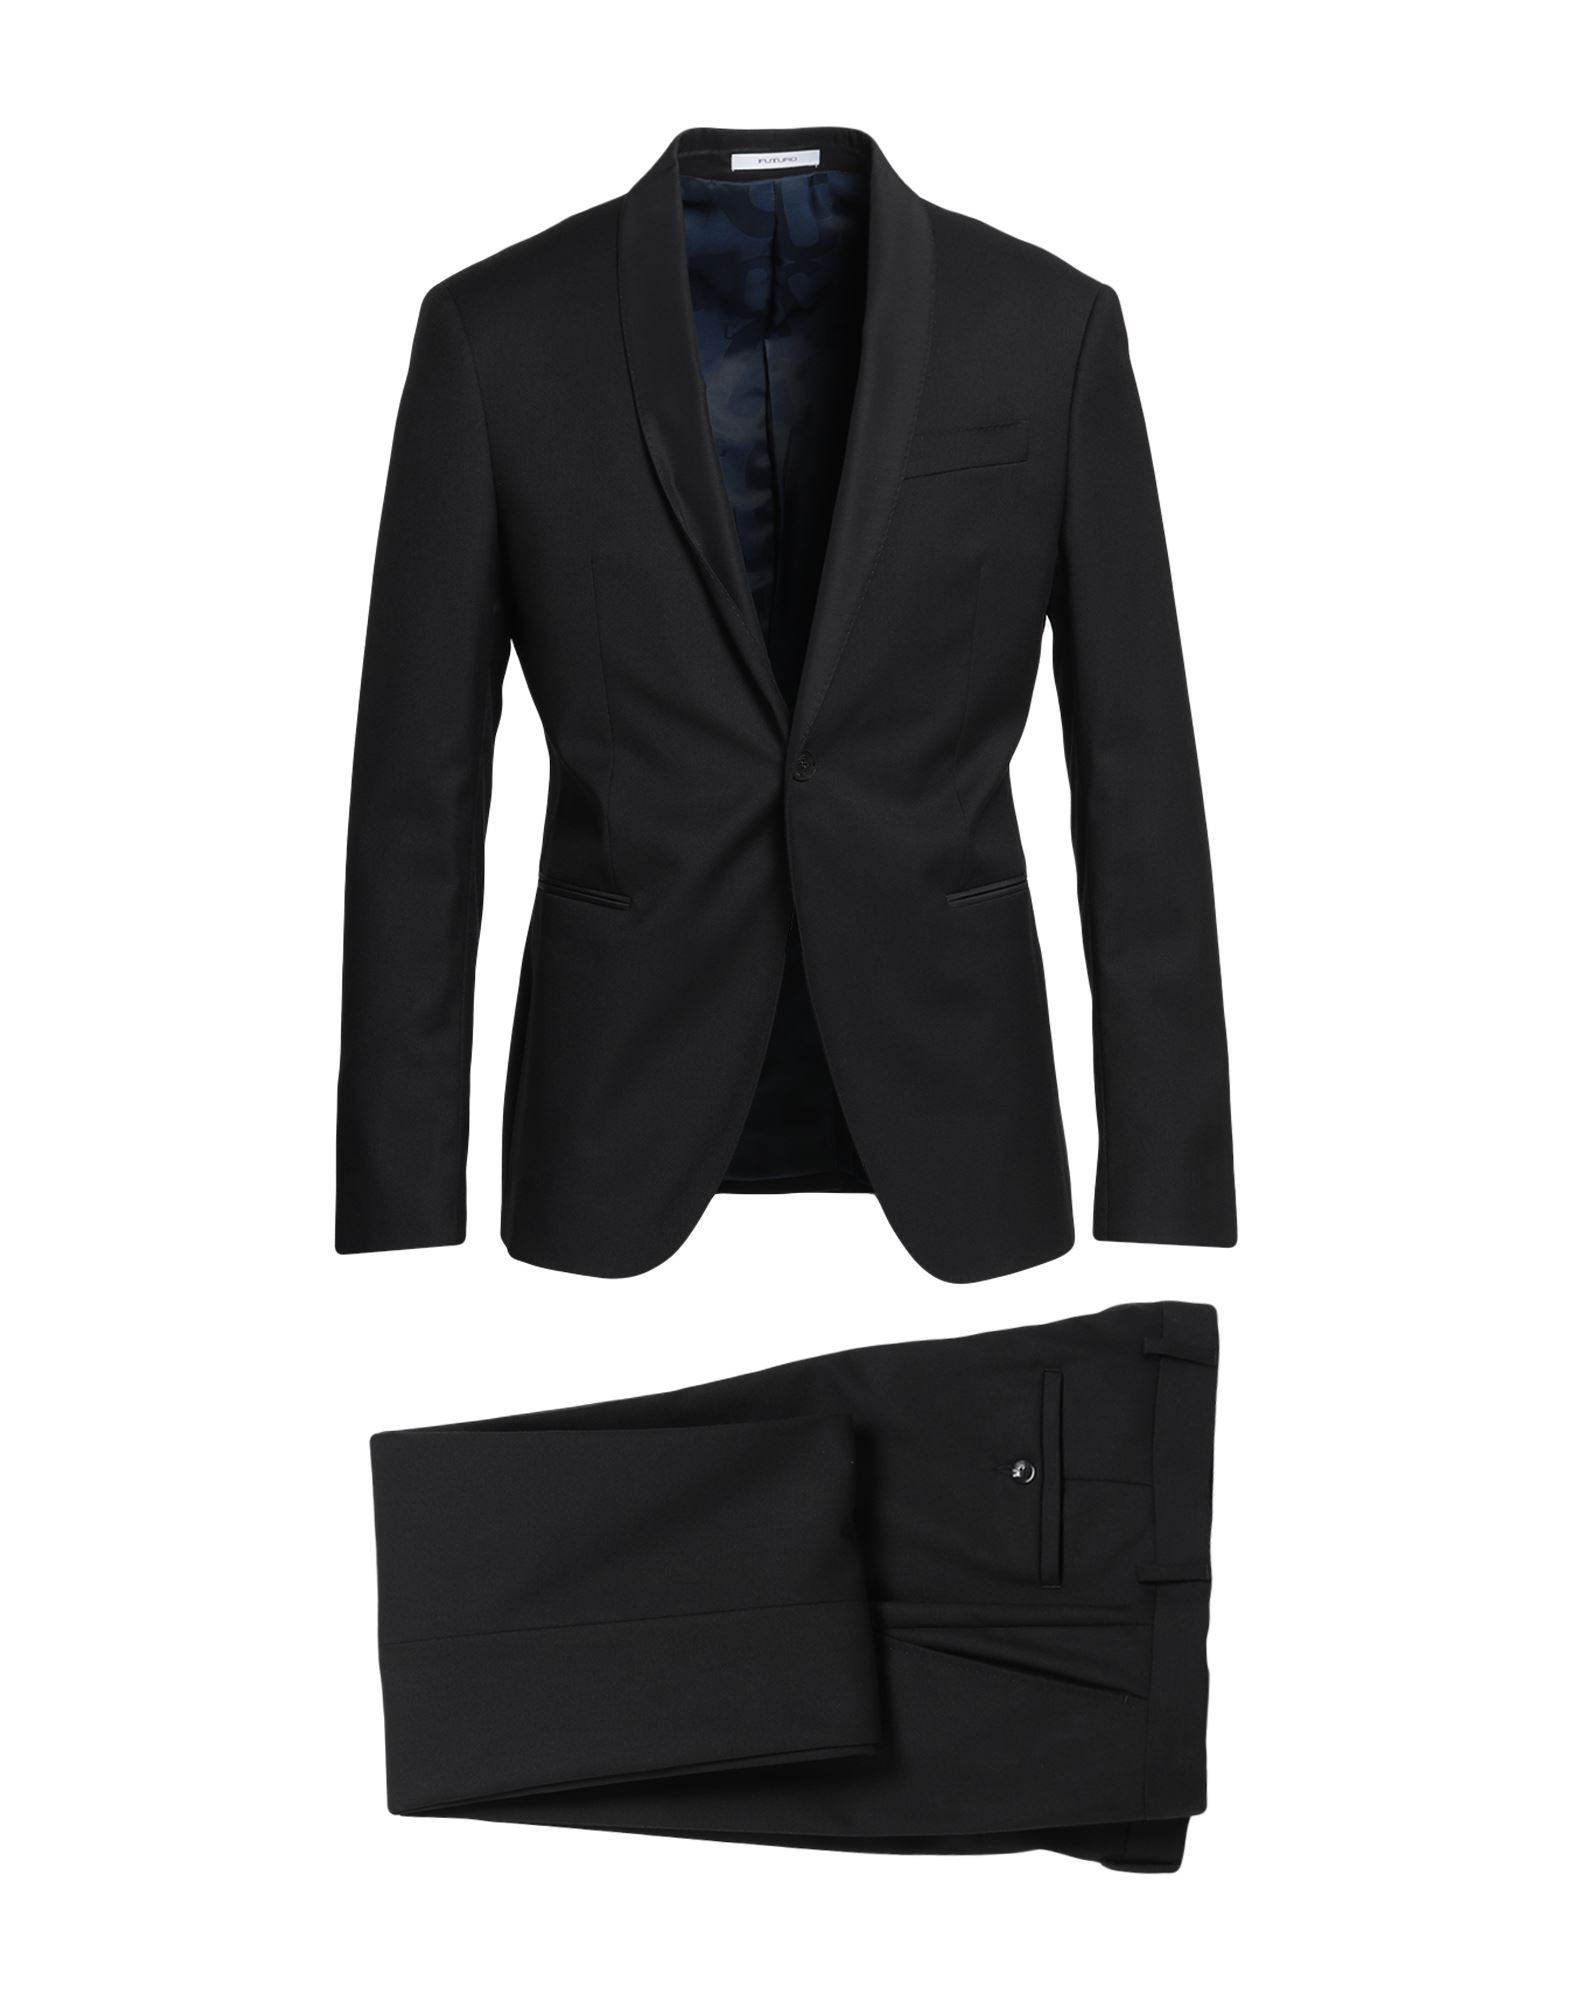 Asfalto Suits In Black